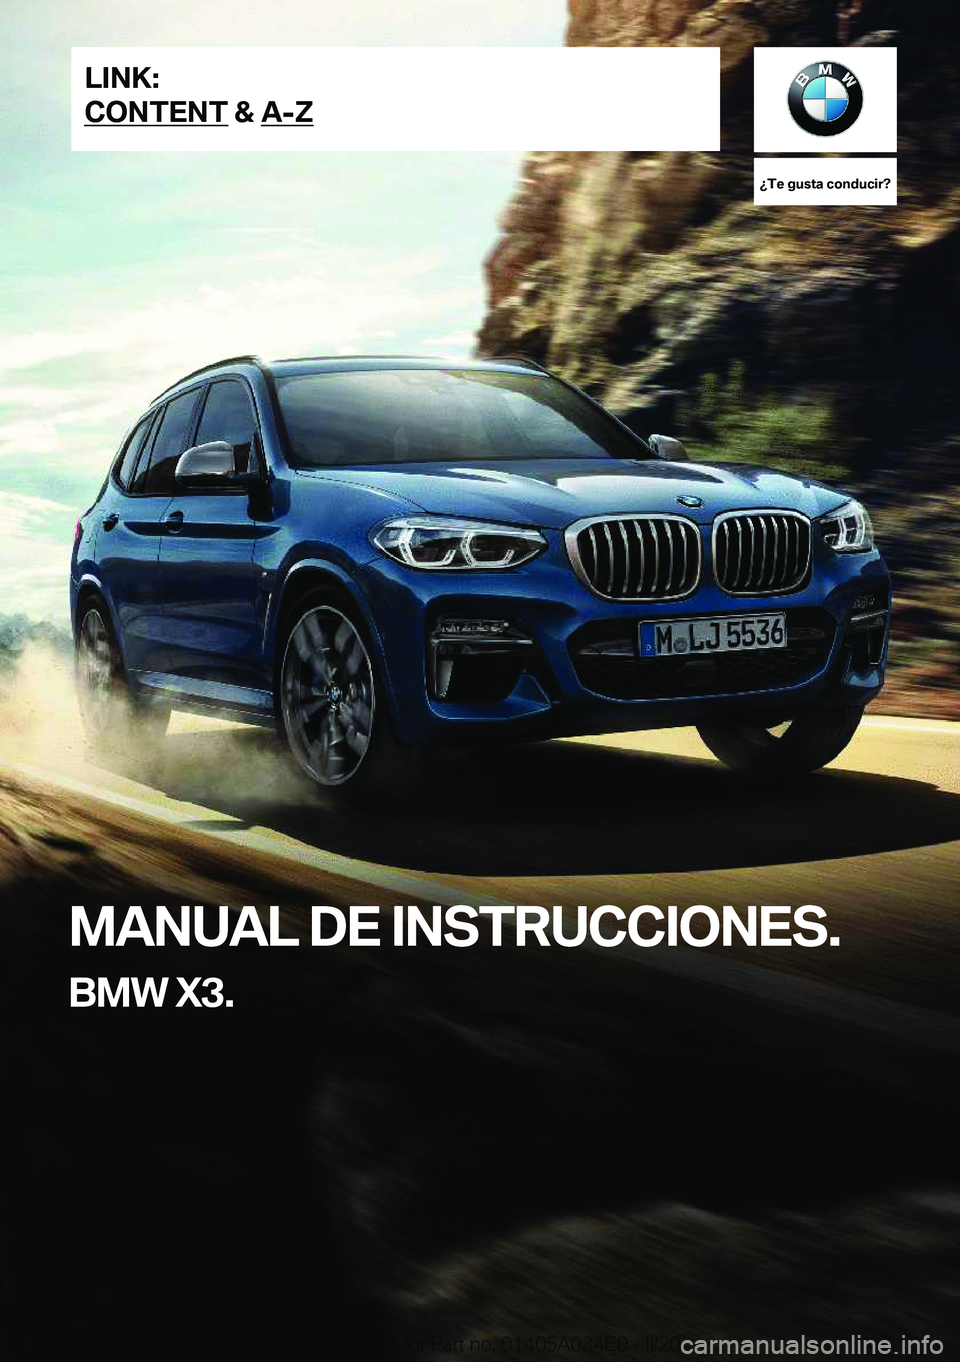 BMW X3 2020  Manuales de Empleo (in Spanish) ��T�e��g�u�s�t�a��c�o�n�d�u�c�i�r� 
�M�A�N�U�A�L��D�E��I�N�S�T�R�U�C�C�I�O�N�E�S�.
�B�M�W��X�3�.�L�I�N�K�:
�C�O�N�T�E�N�T��&��A�-�Z�O�n�l�i�n�e��E�d�i�t�i�o�n��f�o�r��P�a�r�t��n�o�.��0�1�